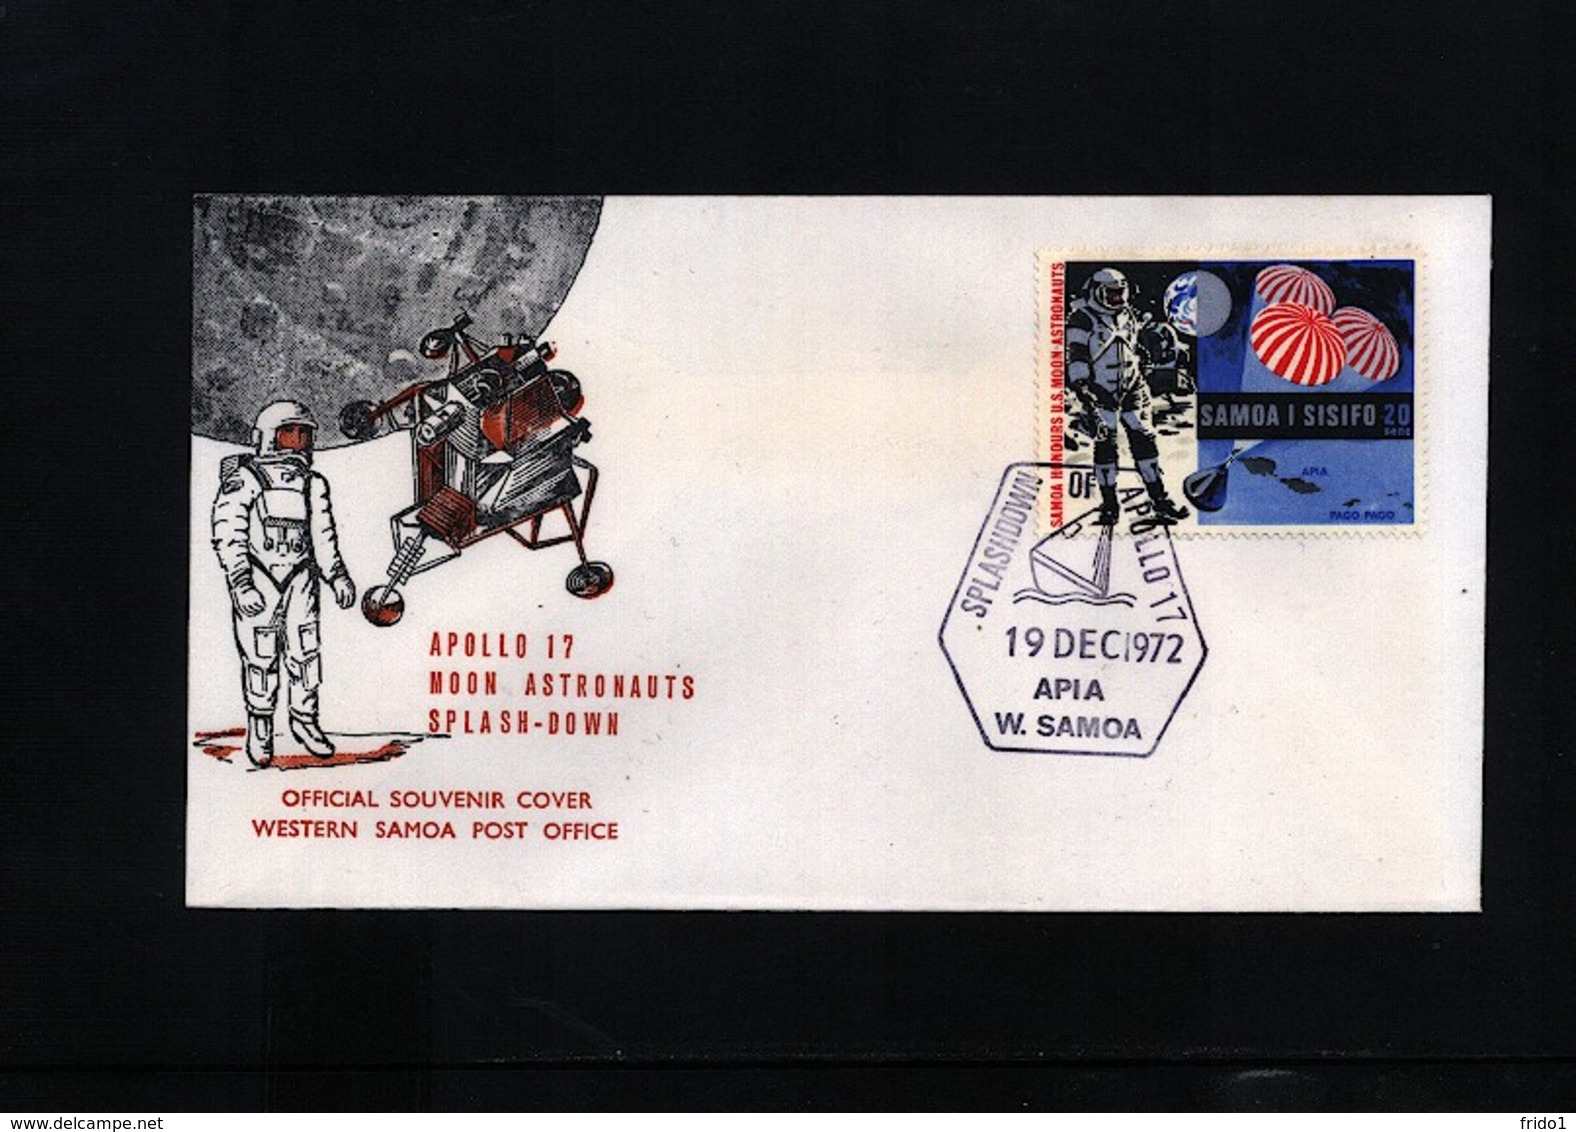 Samoa And Sisifo 1972 Moon Astronauts Interesting Cover - Ozeanien